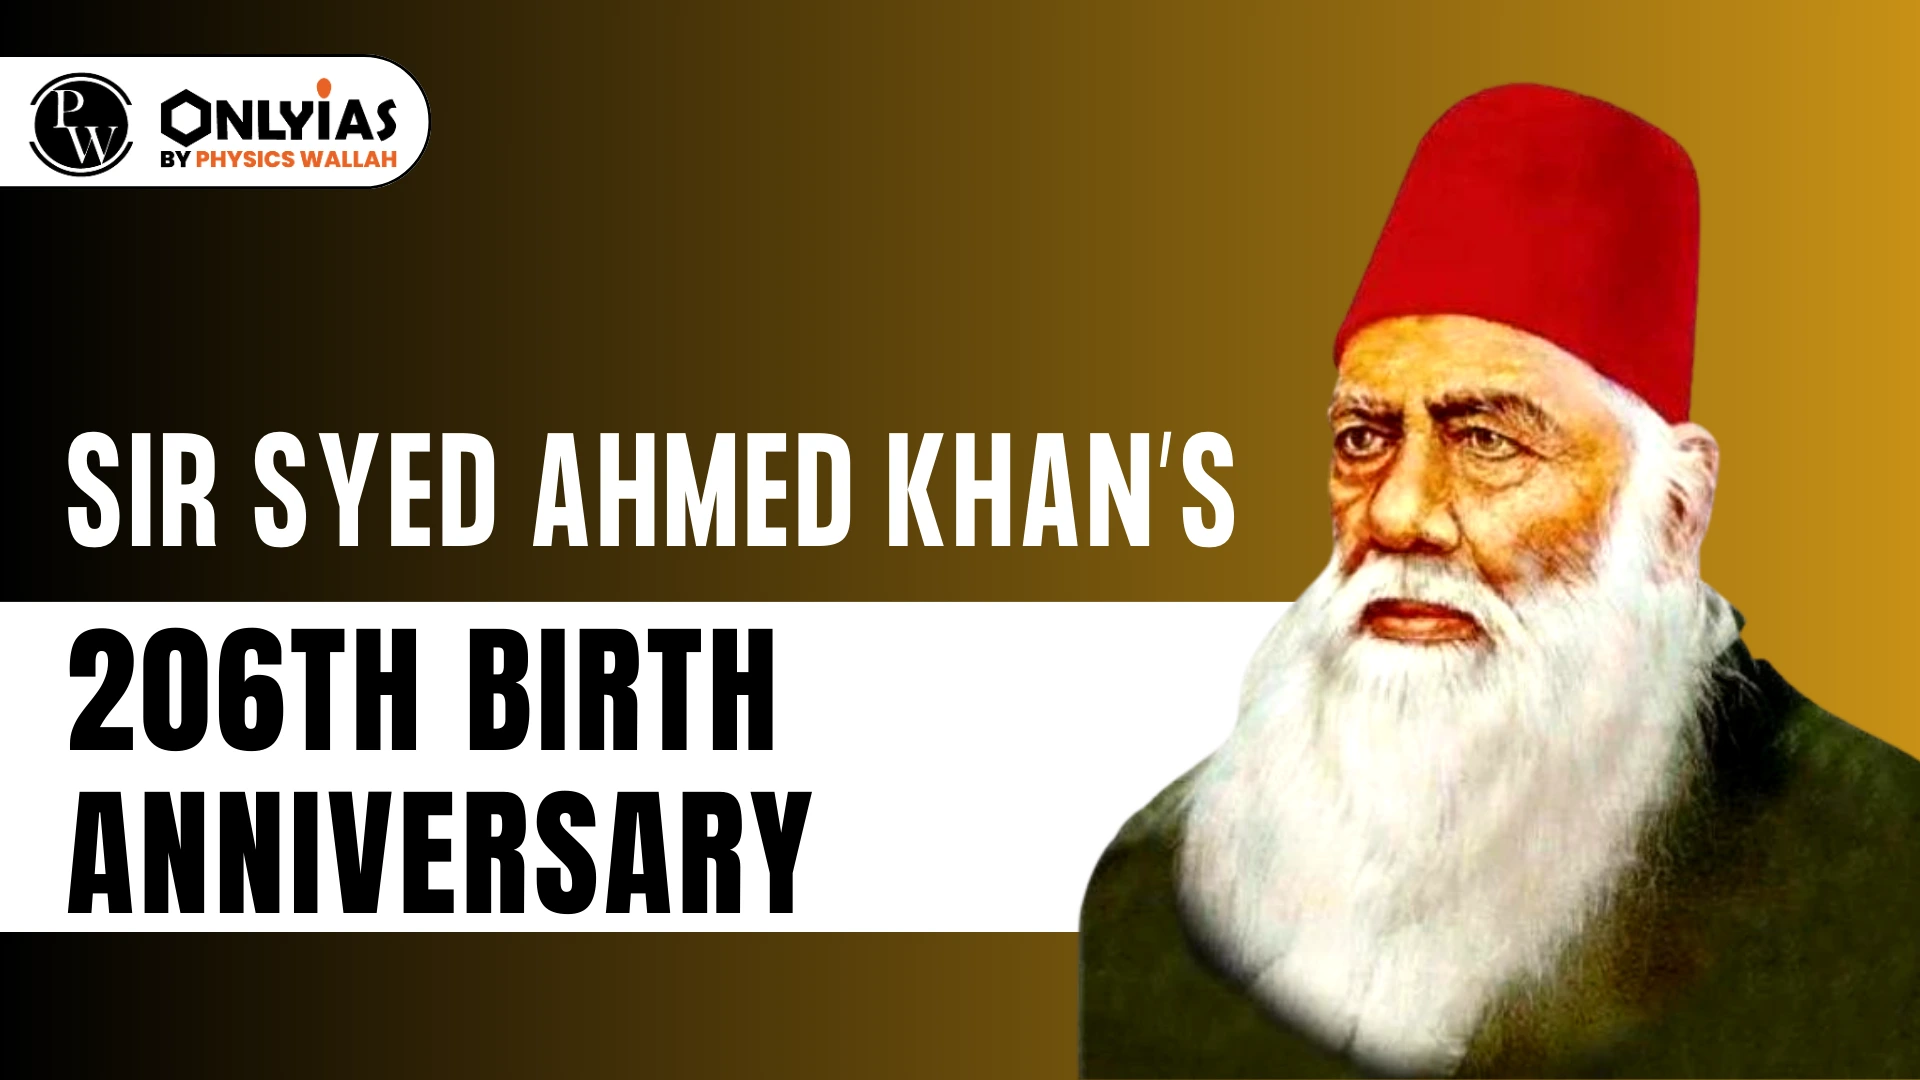 Sir Syed Ahmed Khan’s 206th Birth Anniversary - PWOnlyIAS